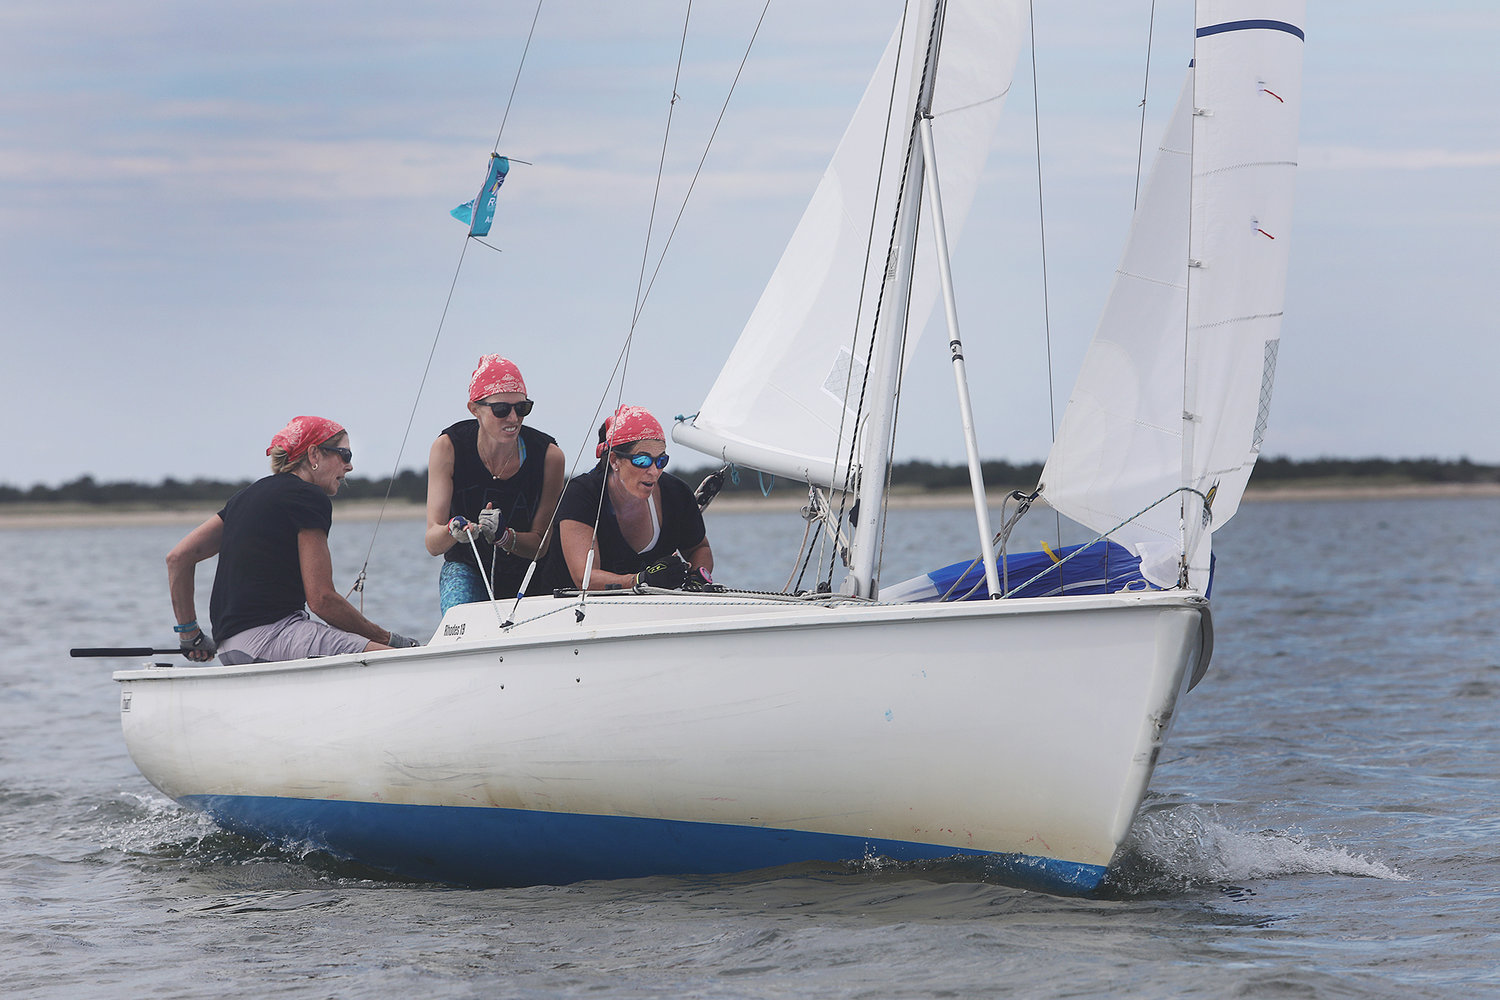 Sandy Adzick handles the tiller as Vanessa Coleman and Hollis von Summer trim the sails during the 2021 Women's Regatta in the harbor on Wednesday.